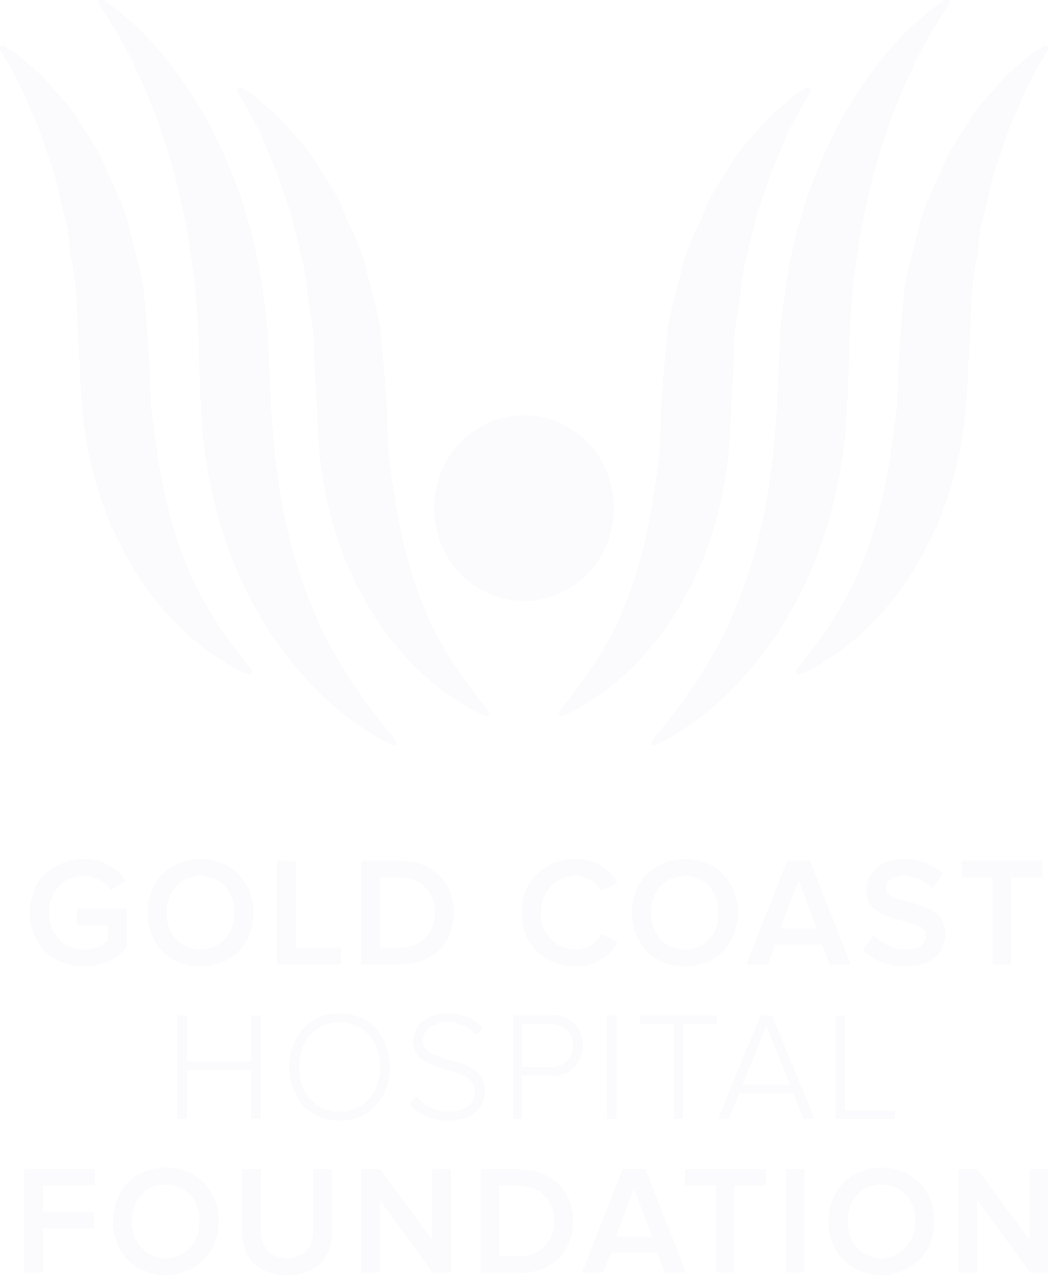 Gold Coast Hospital Foundation